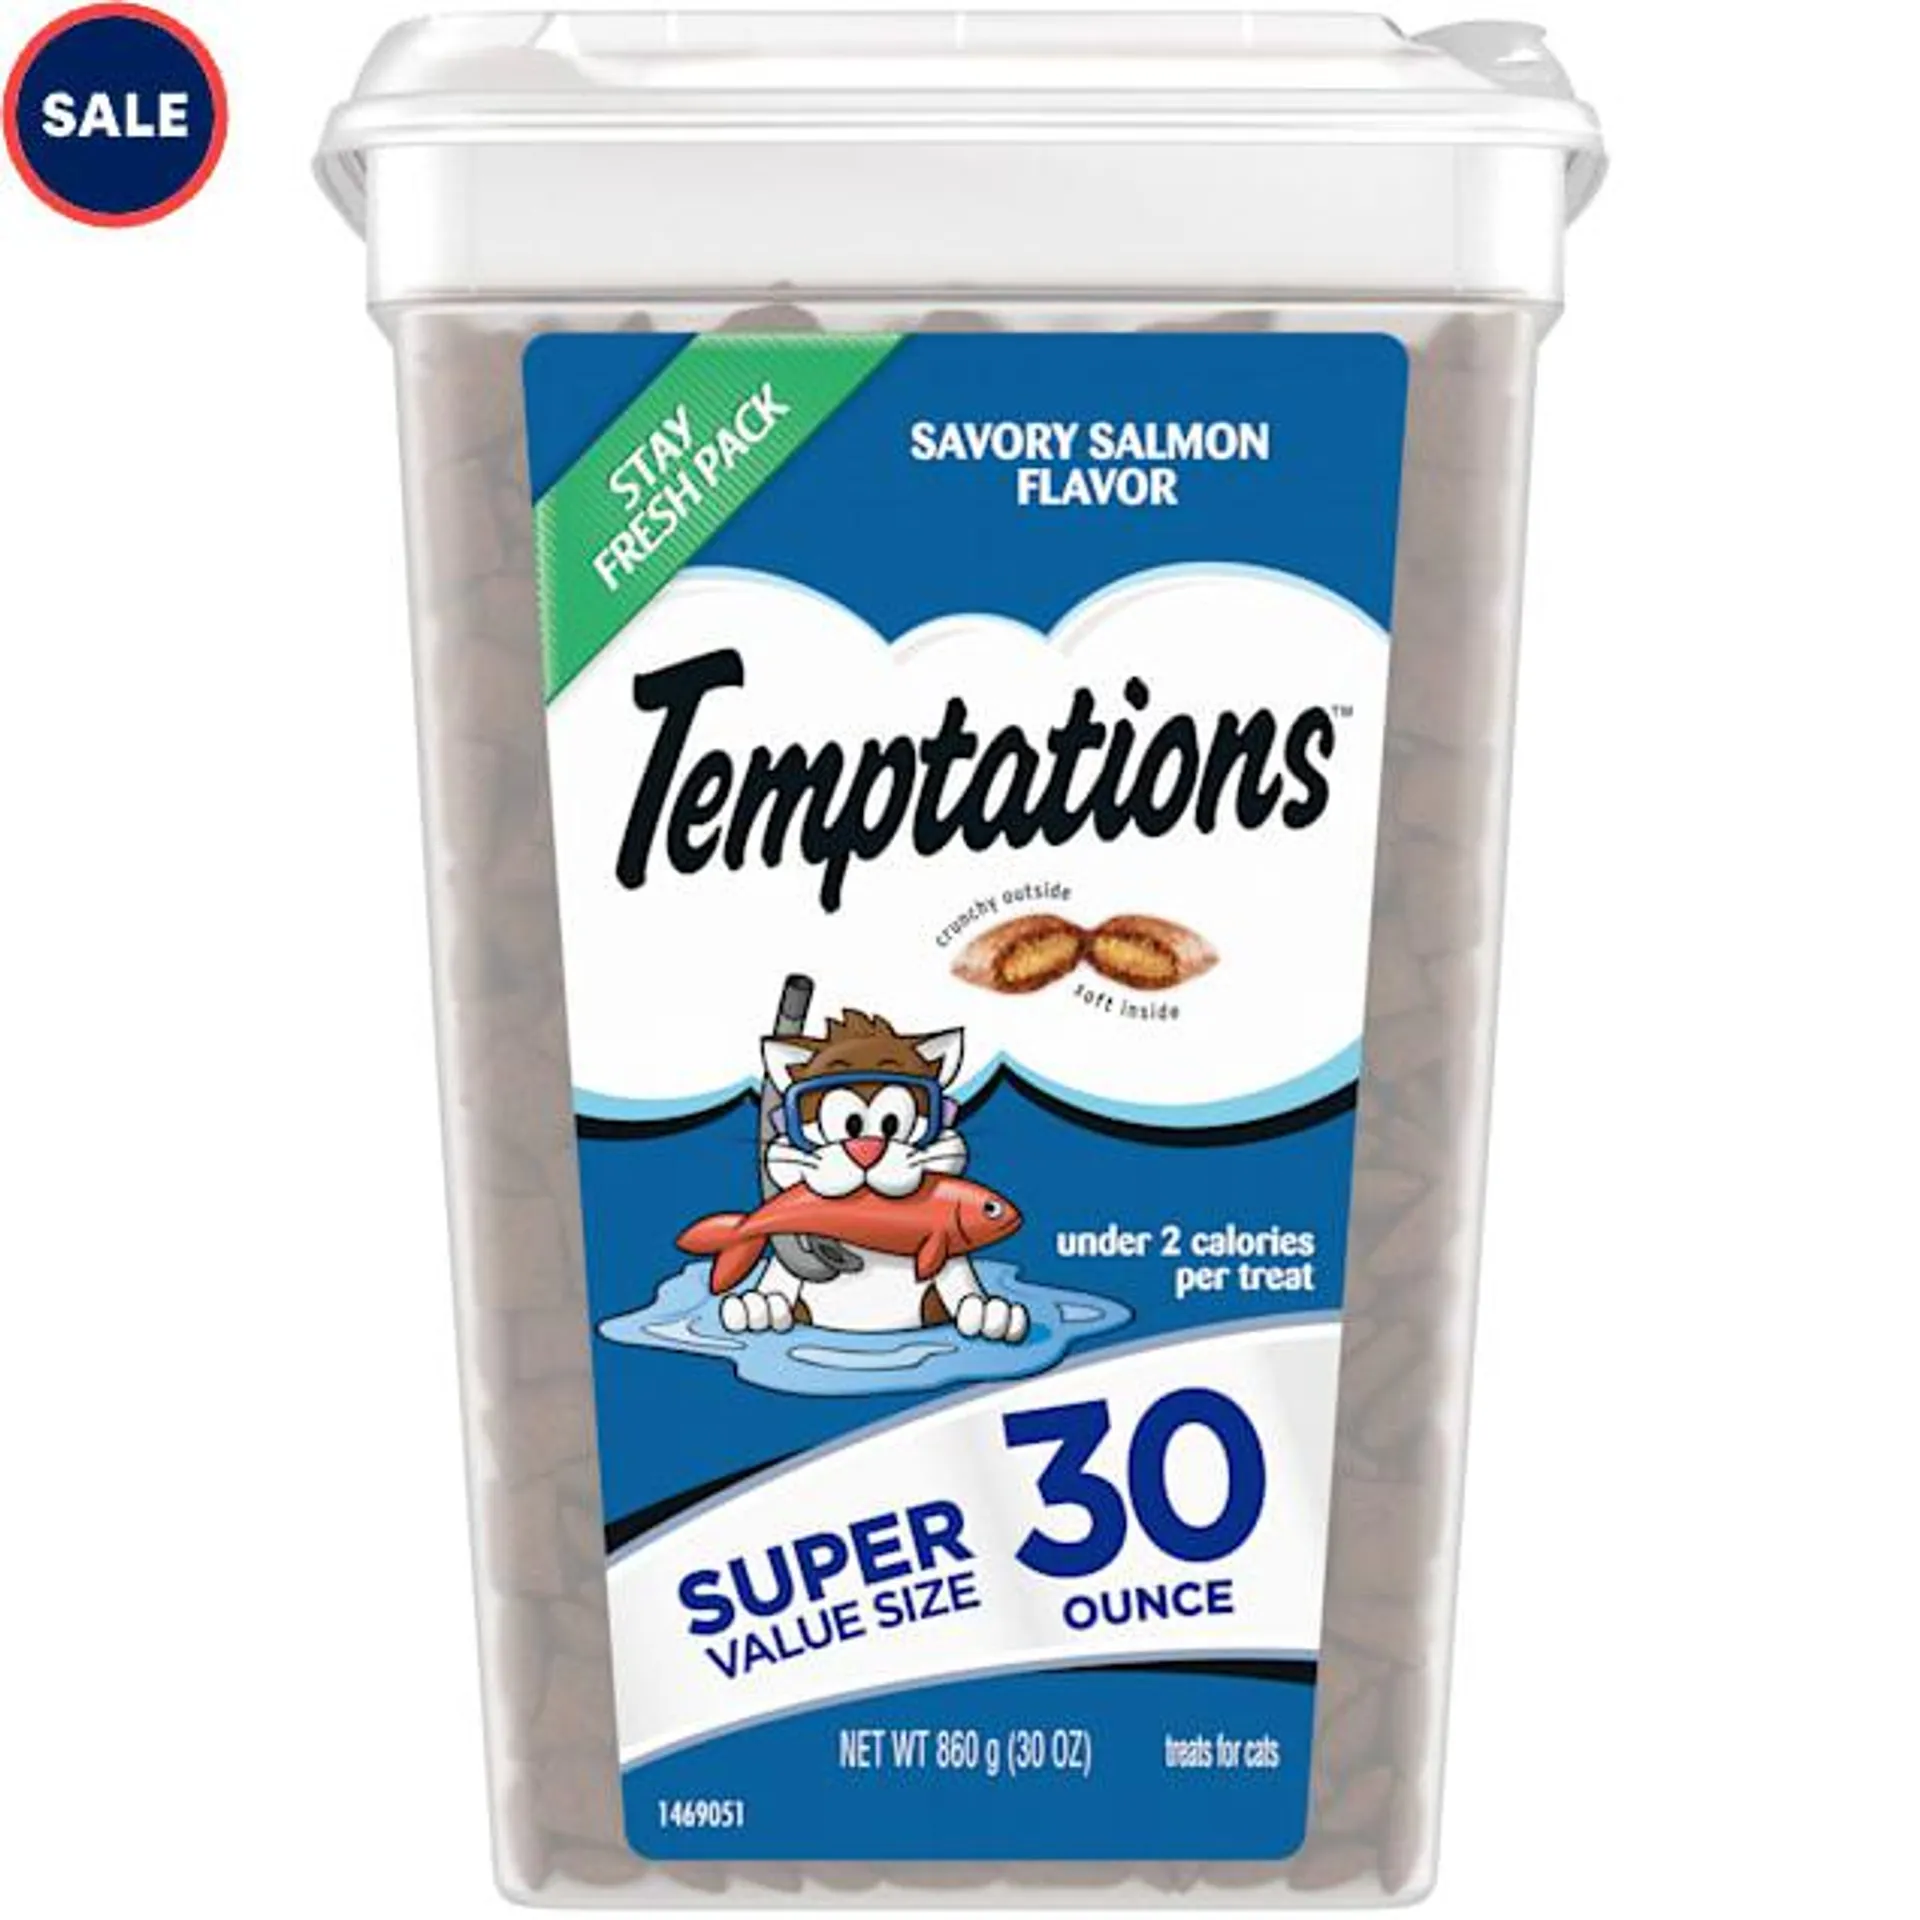 Temptations Classic Crunchy and Soft Cat Treats Savory Salmon Flavor, 30 oz.